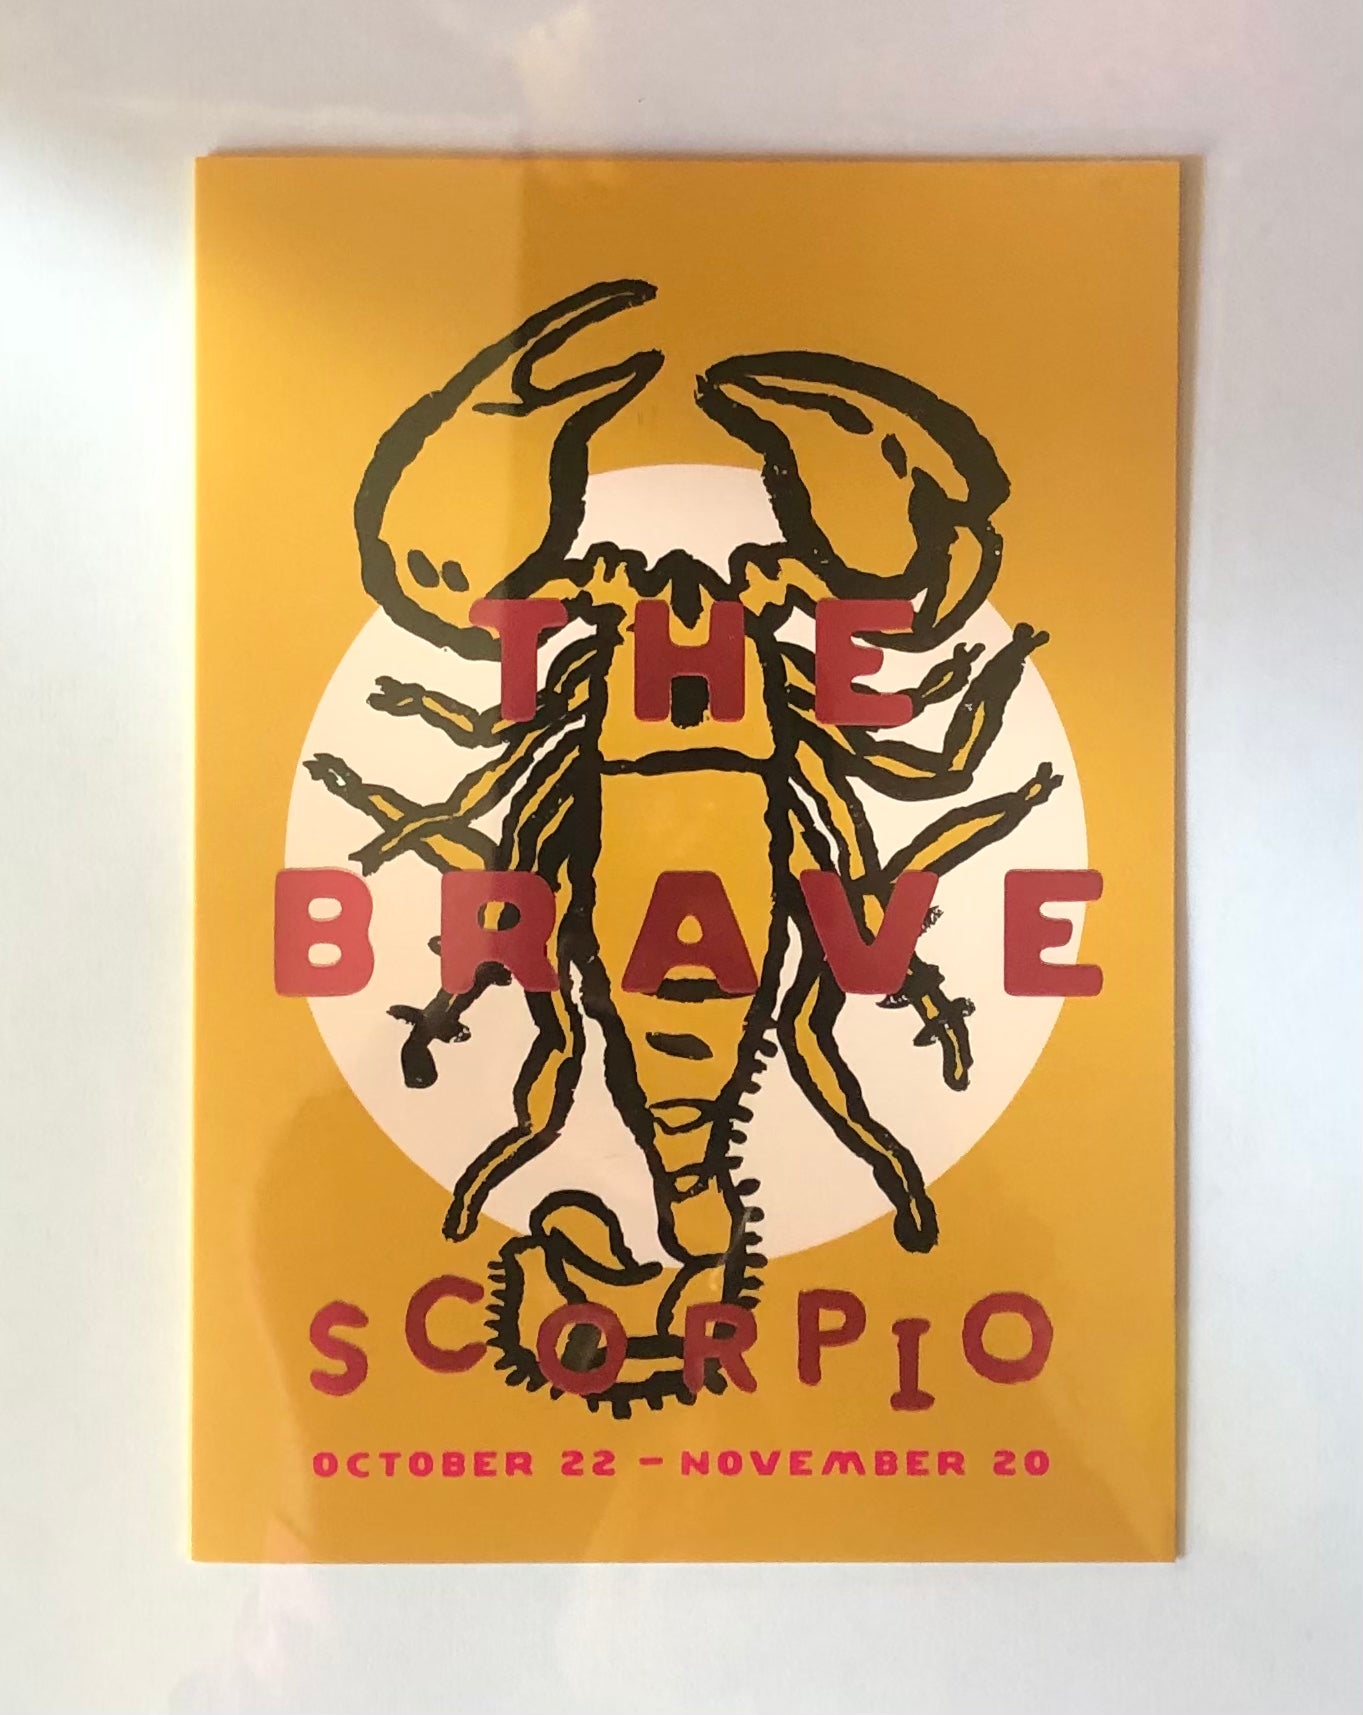 The Brave Scorpio card